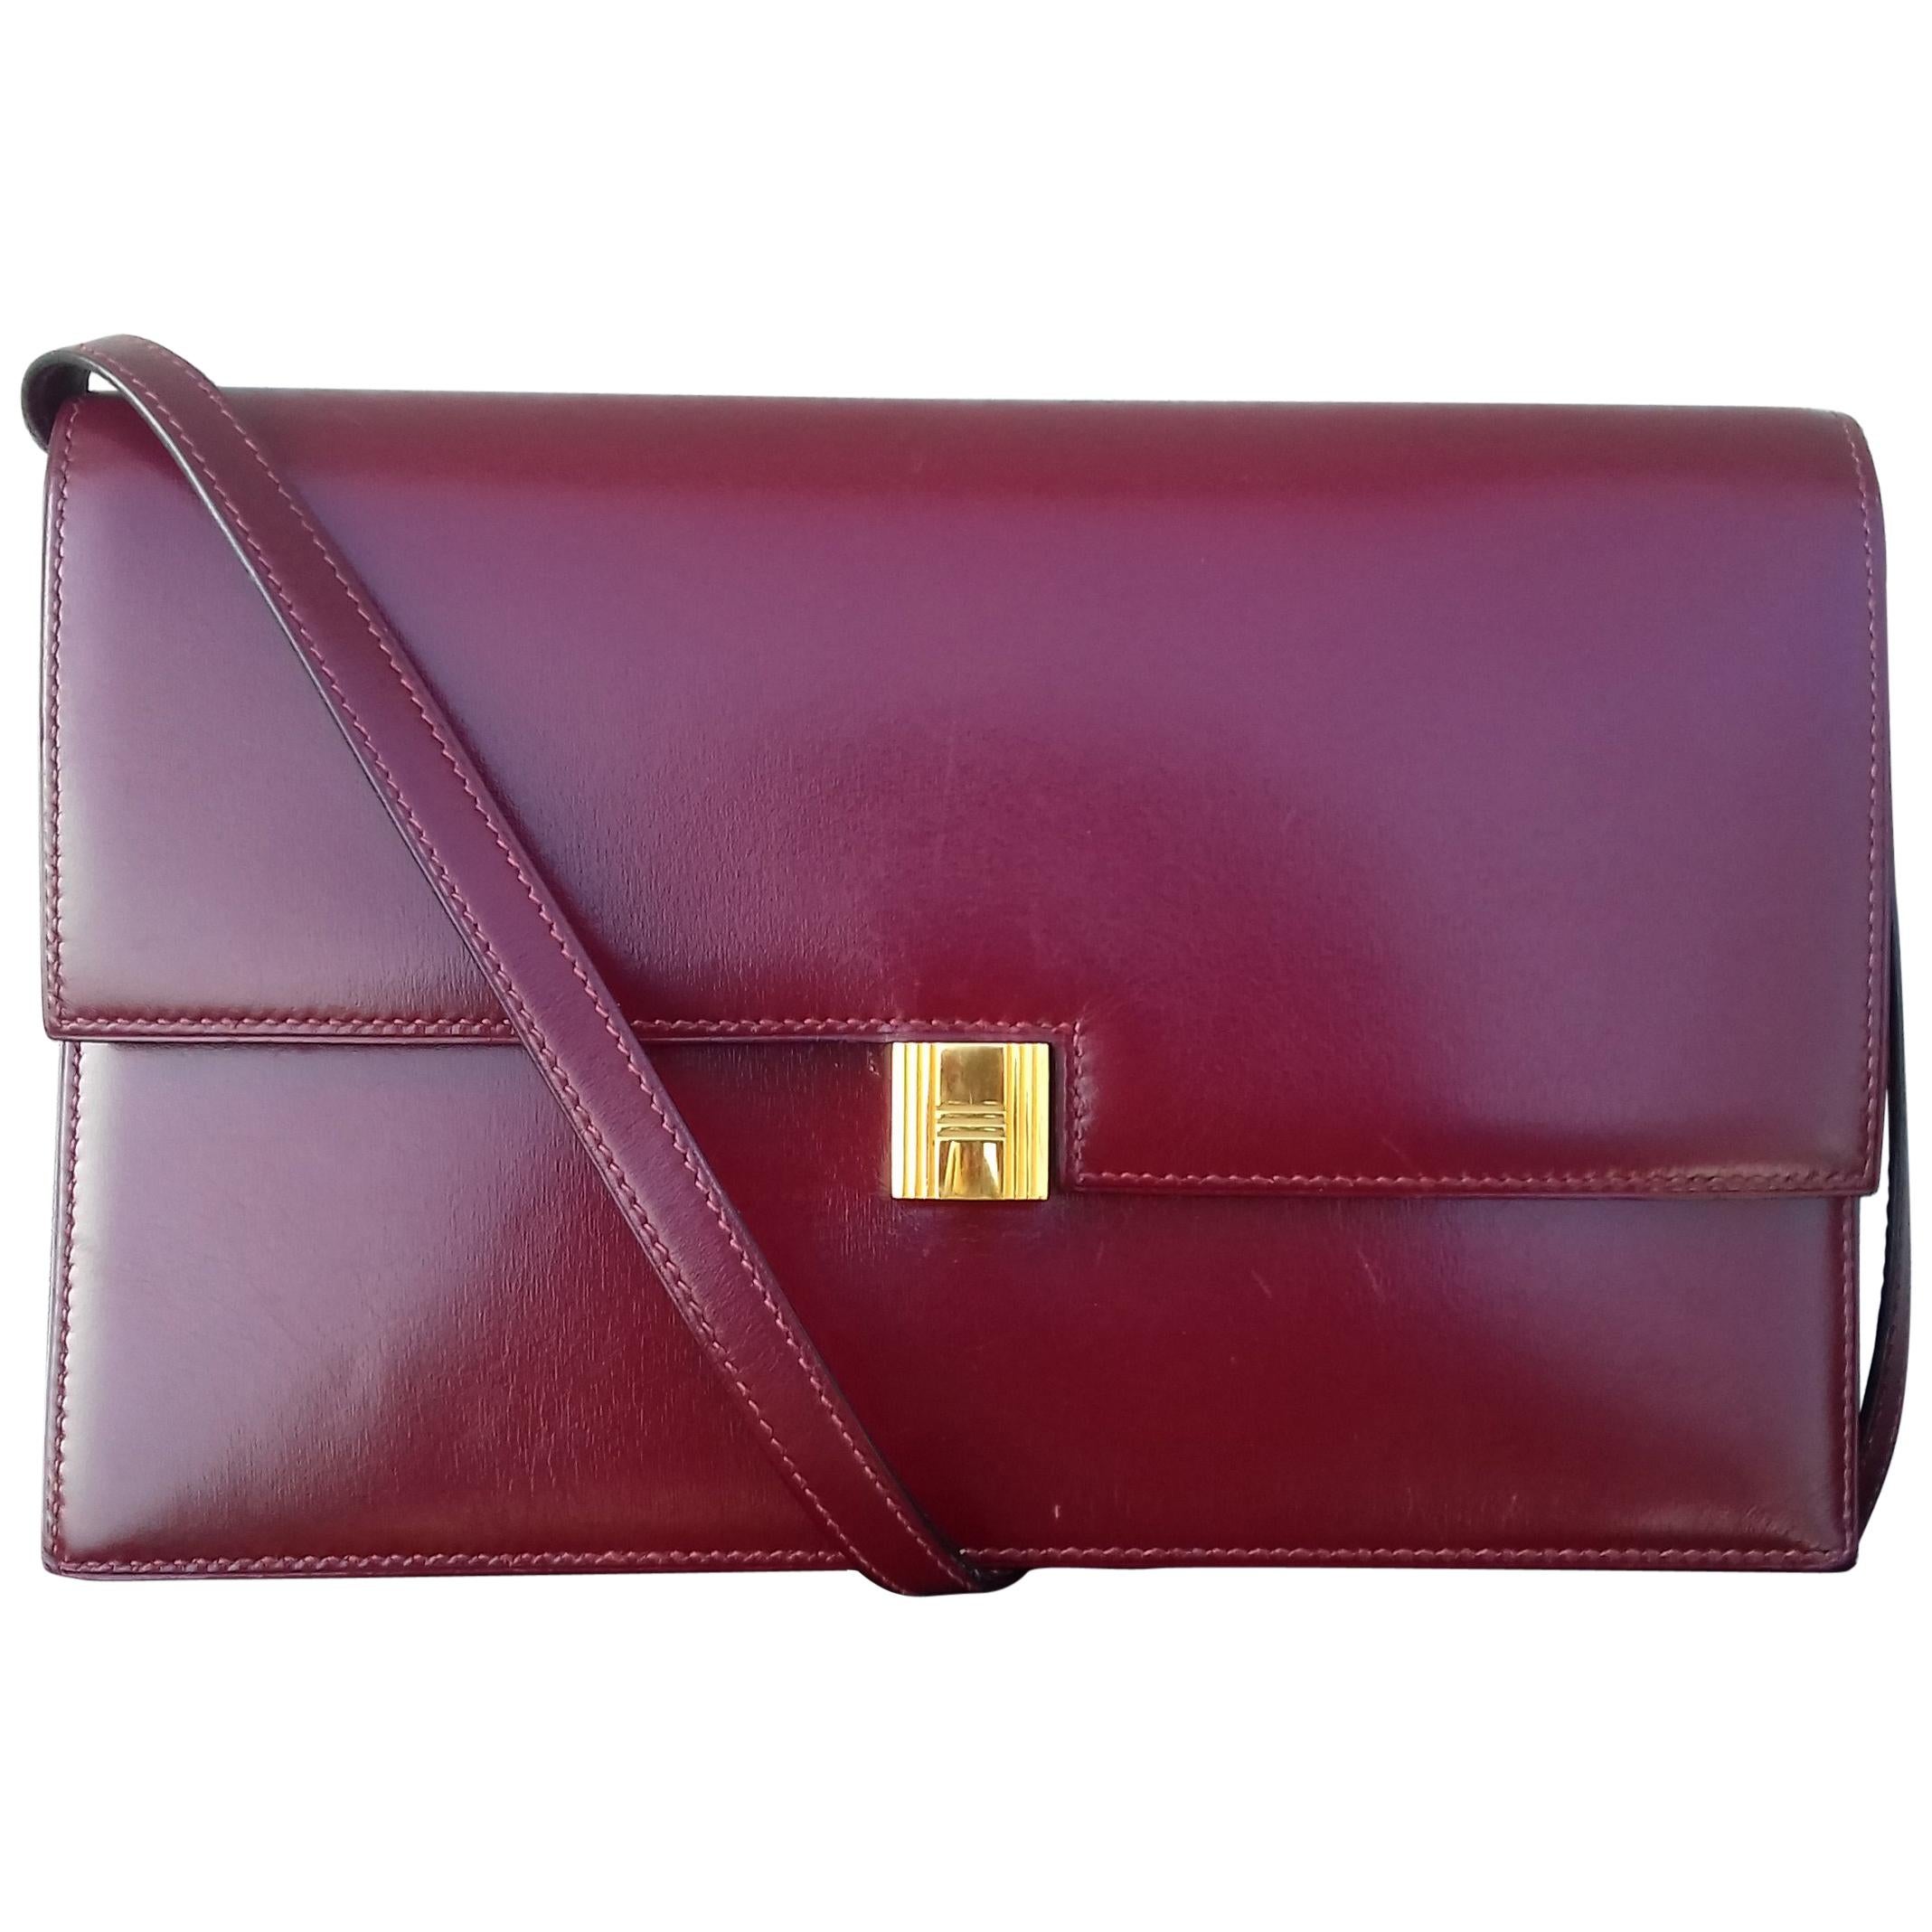 Exceptionnal Rare Vintage Hermès Padlock Purse Clutch Bag Burgundy Leather Ghw